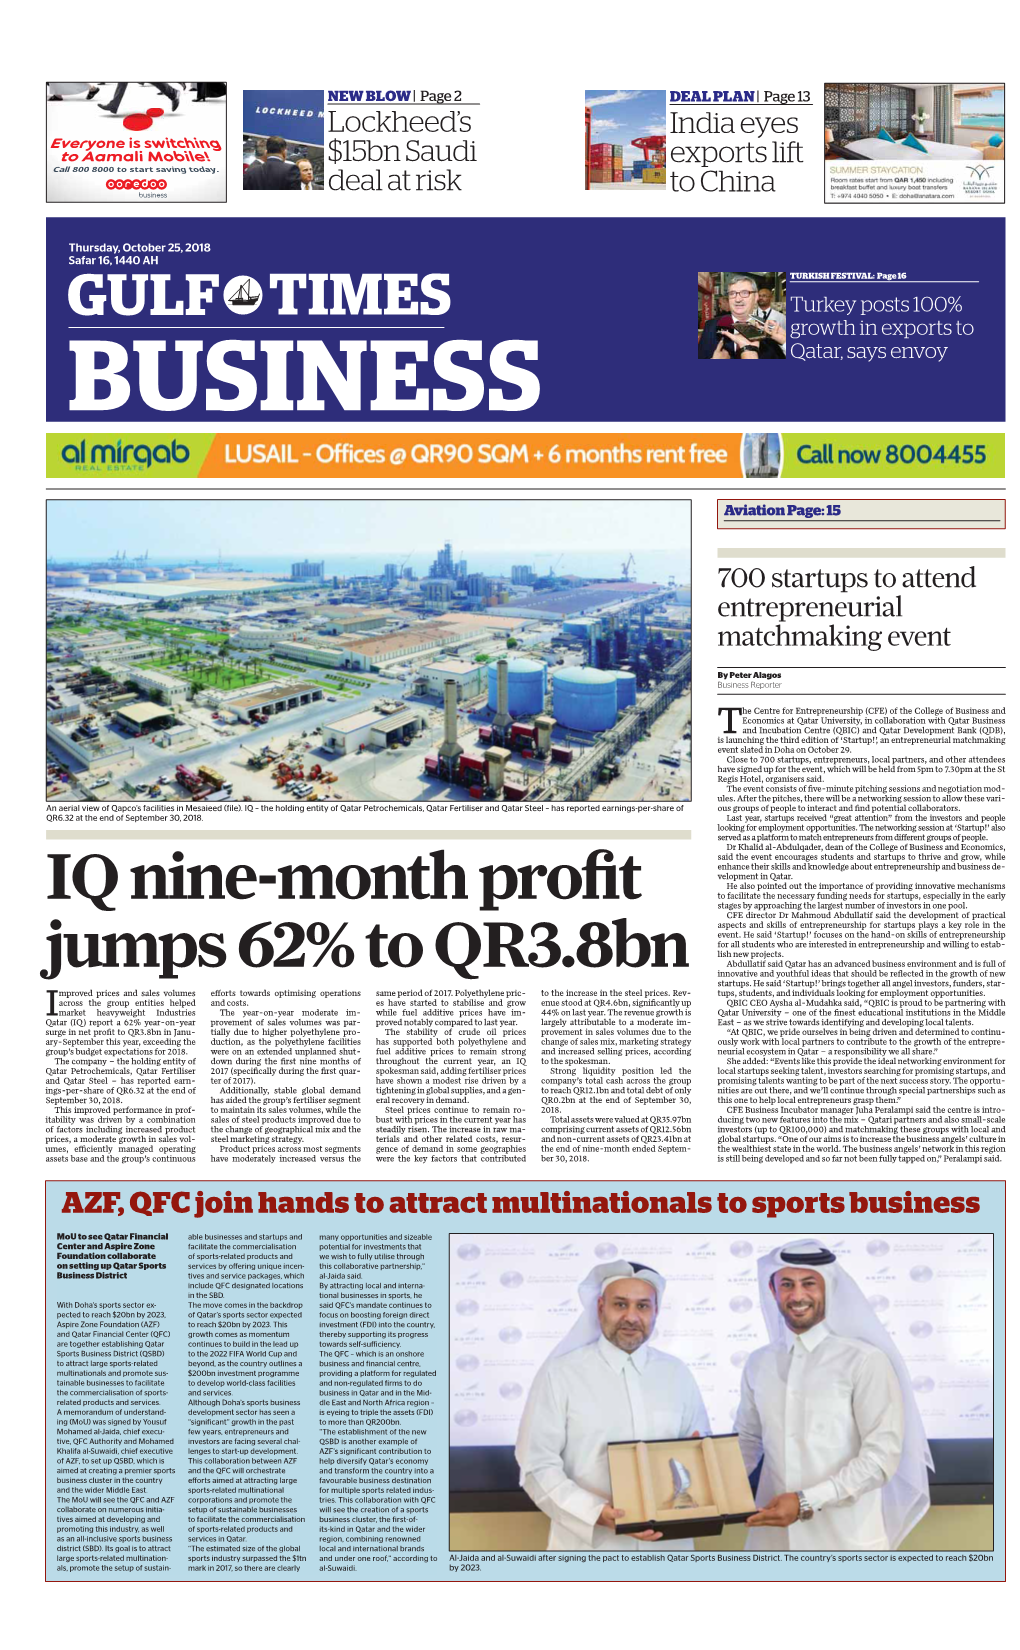 IQ Nine-Month Profit Jumps 62% to QR3.8Bn